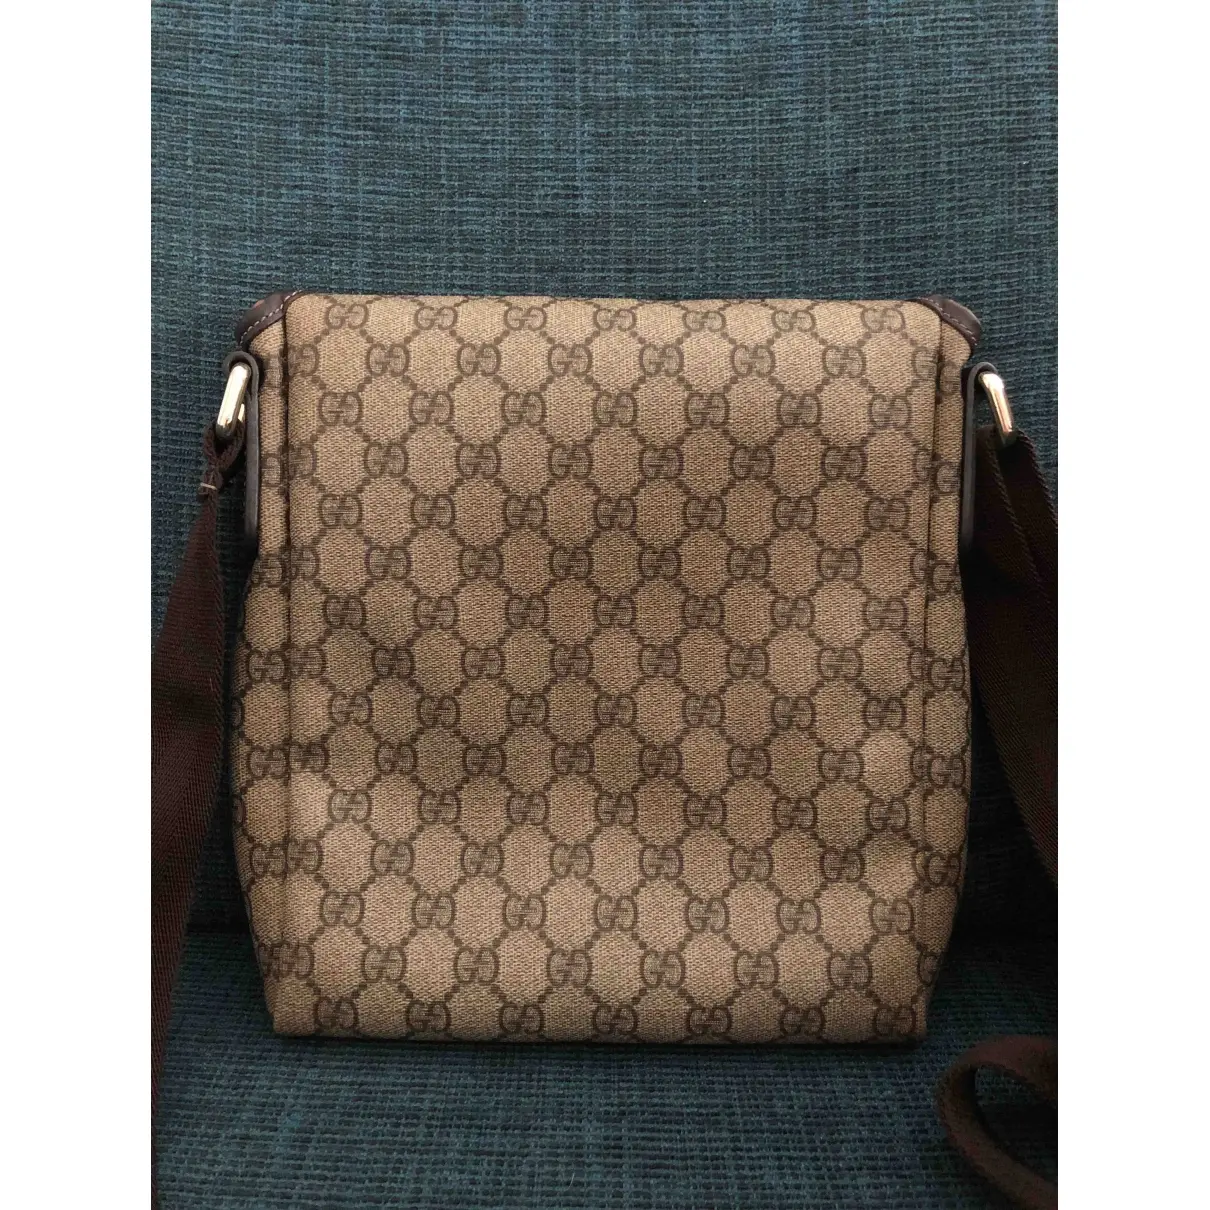 Gucci Cloth crossbody bag for sale - Vintage